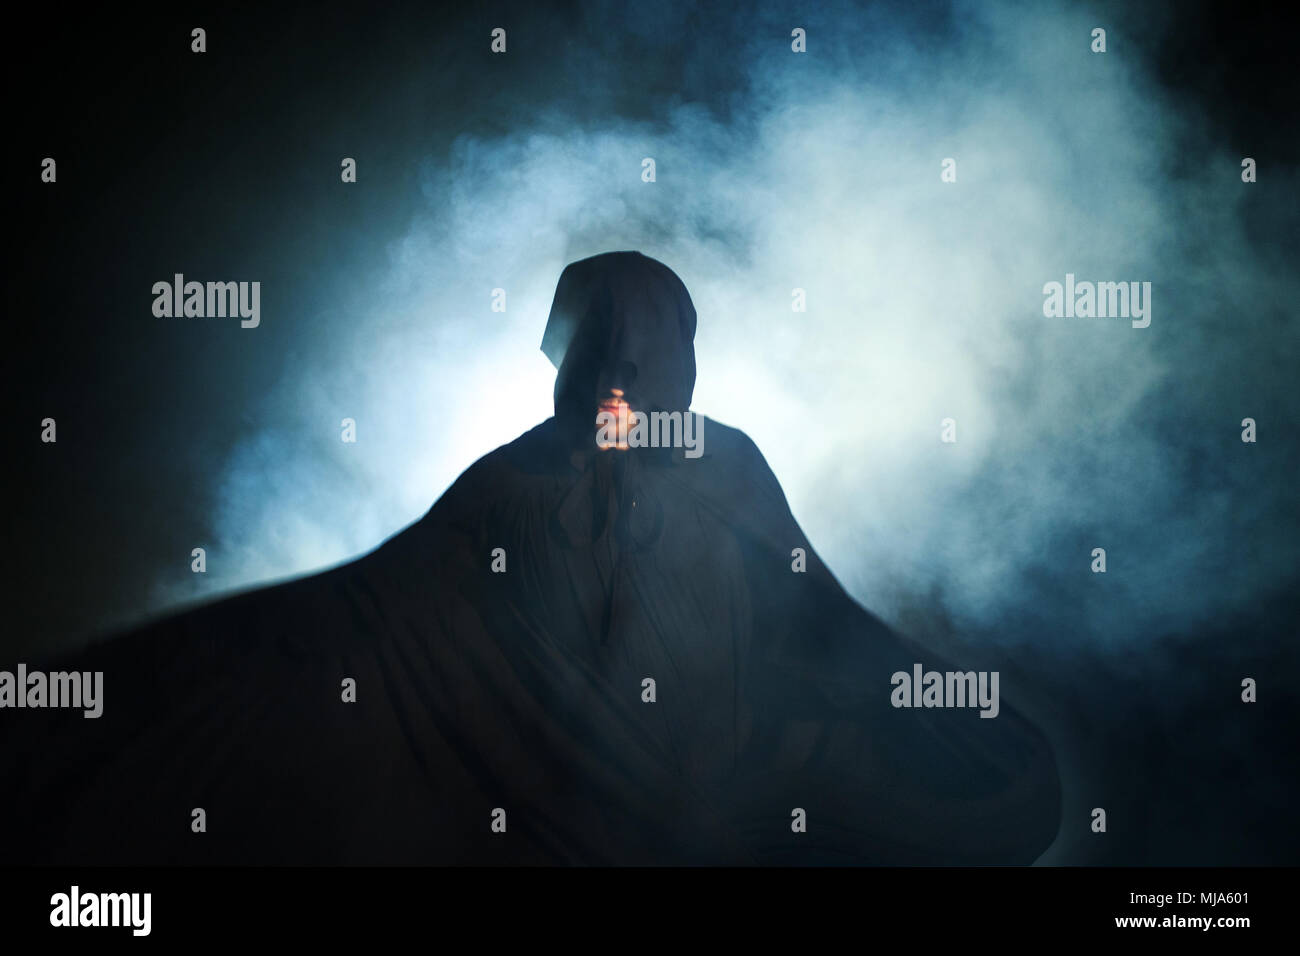 Gloomy image. Man in a black cloak. Demonic image. Magician illusionist. Smoke background Stock Photo